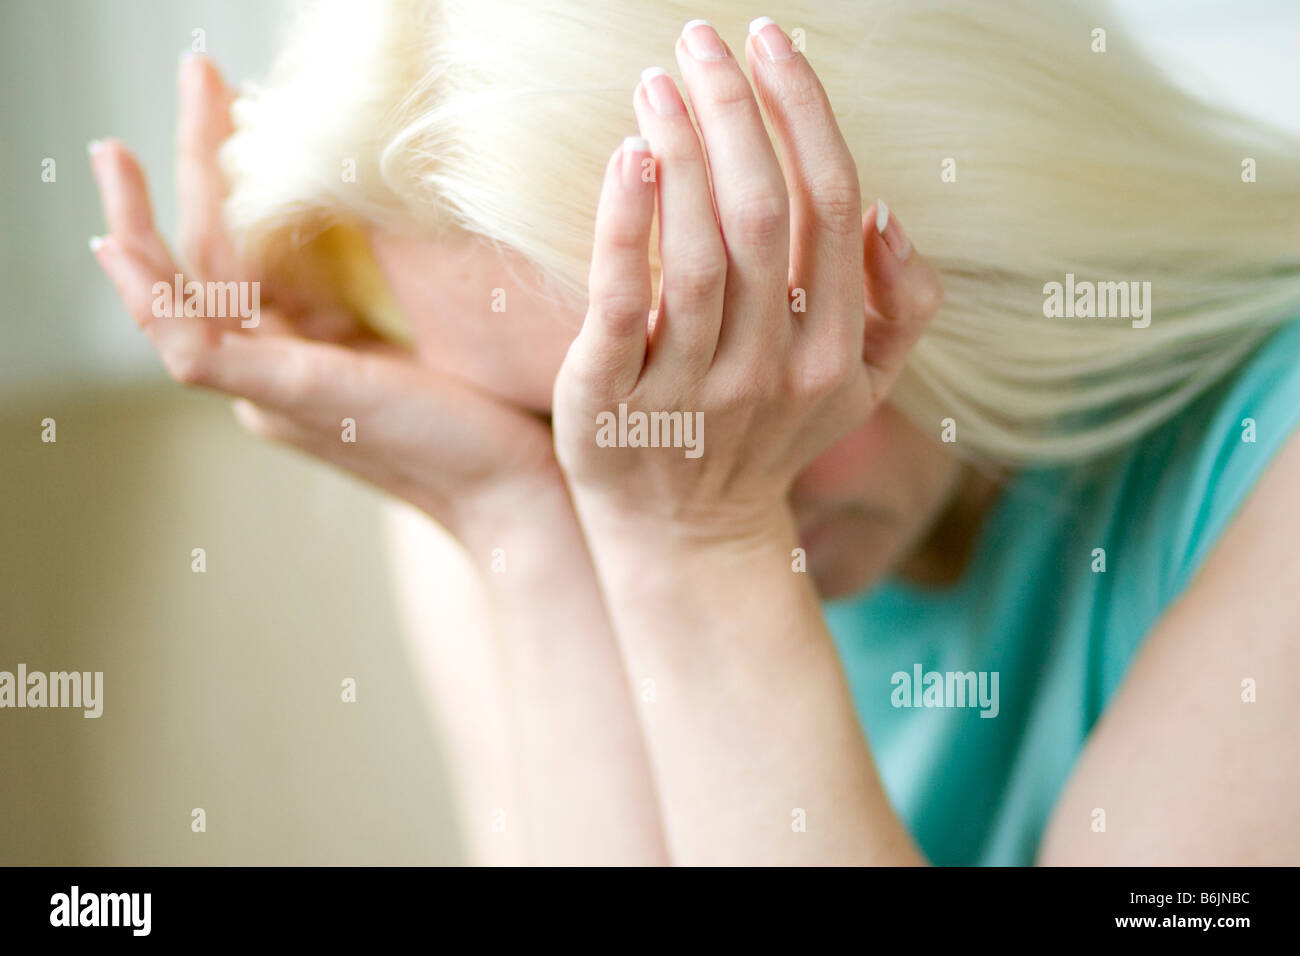 Girl rubbing eyes Stock Photo